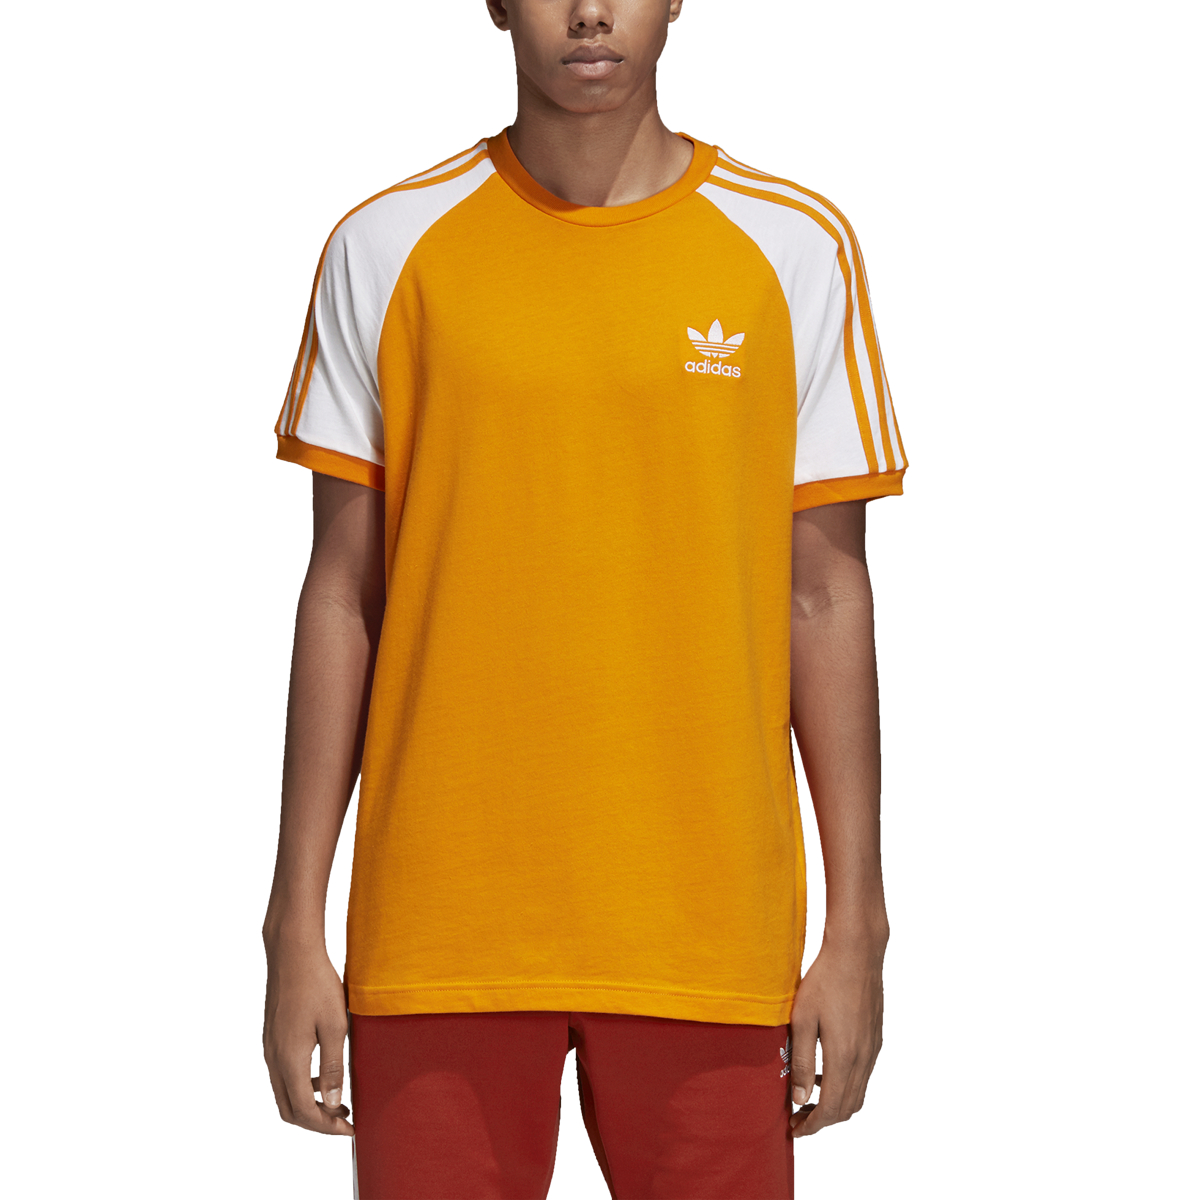 Adidas Men's Originals 3-Stripes Tee Bright Orange DH5809 | eBay